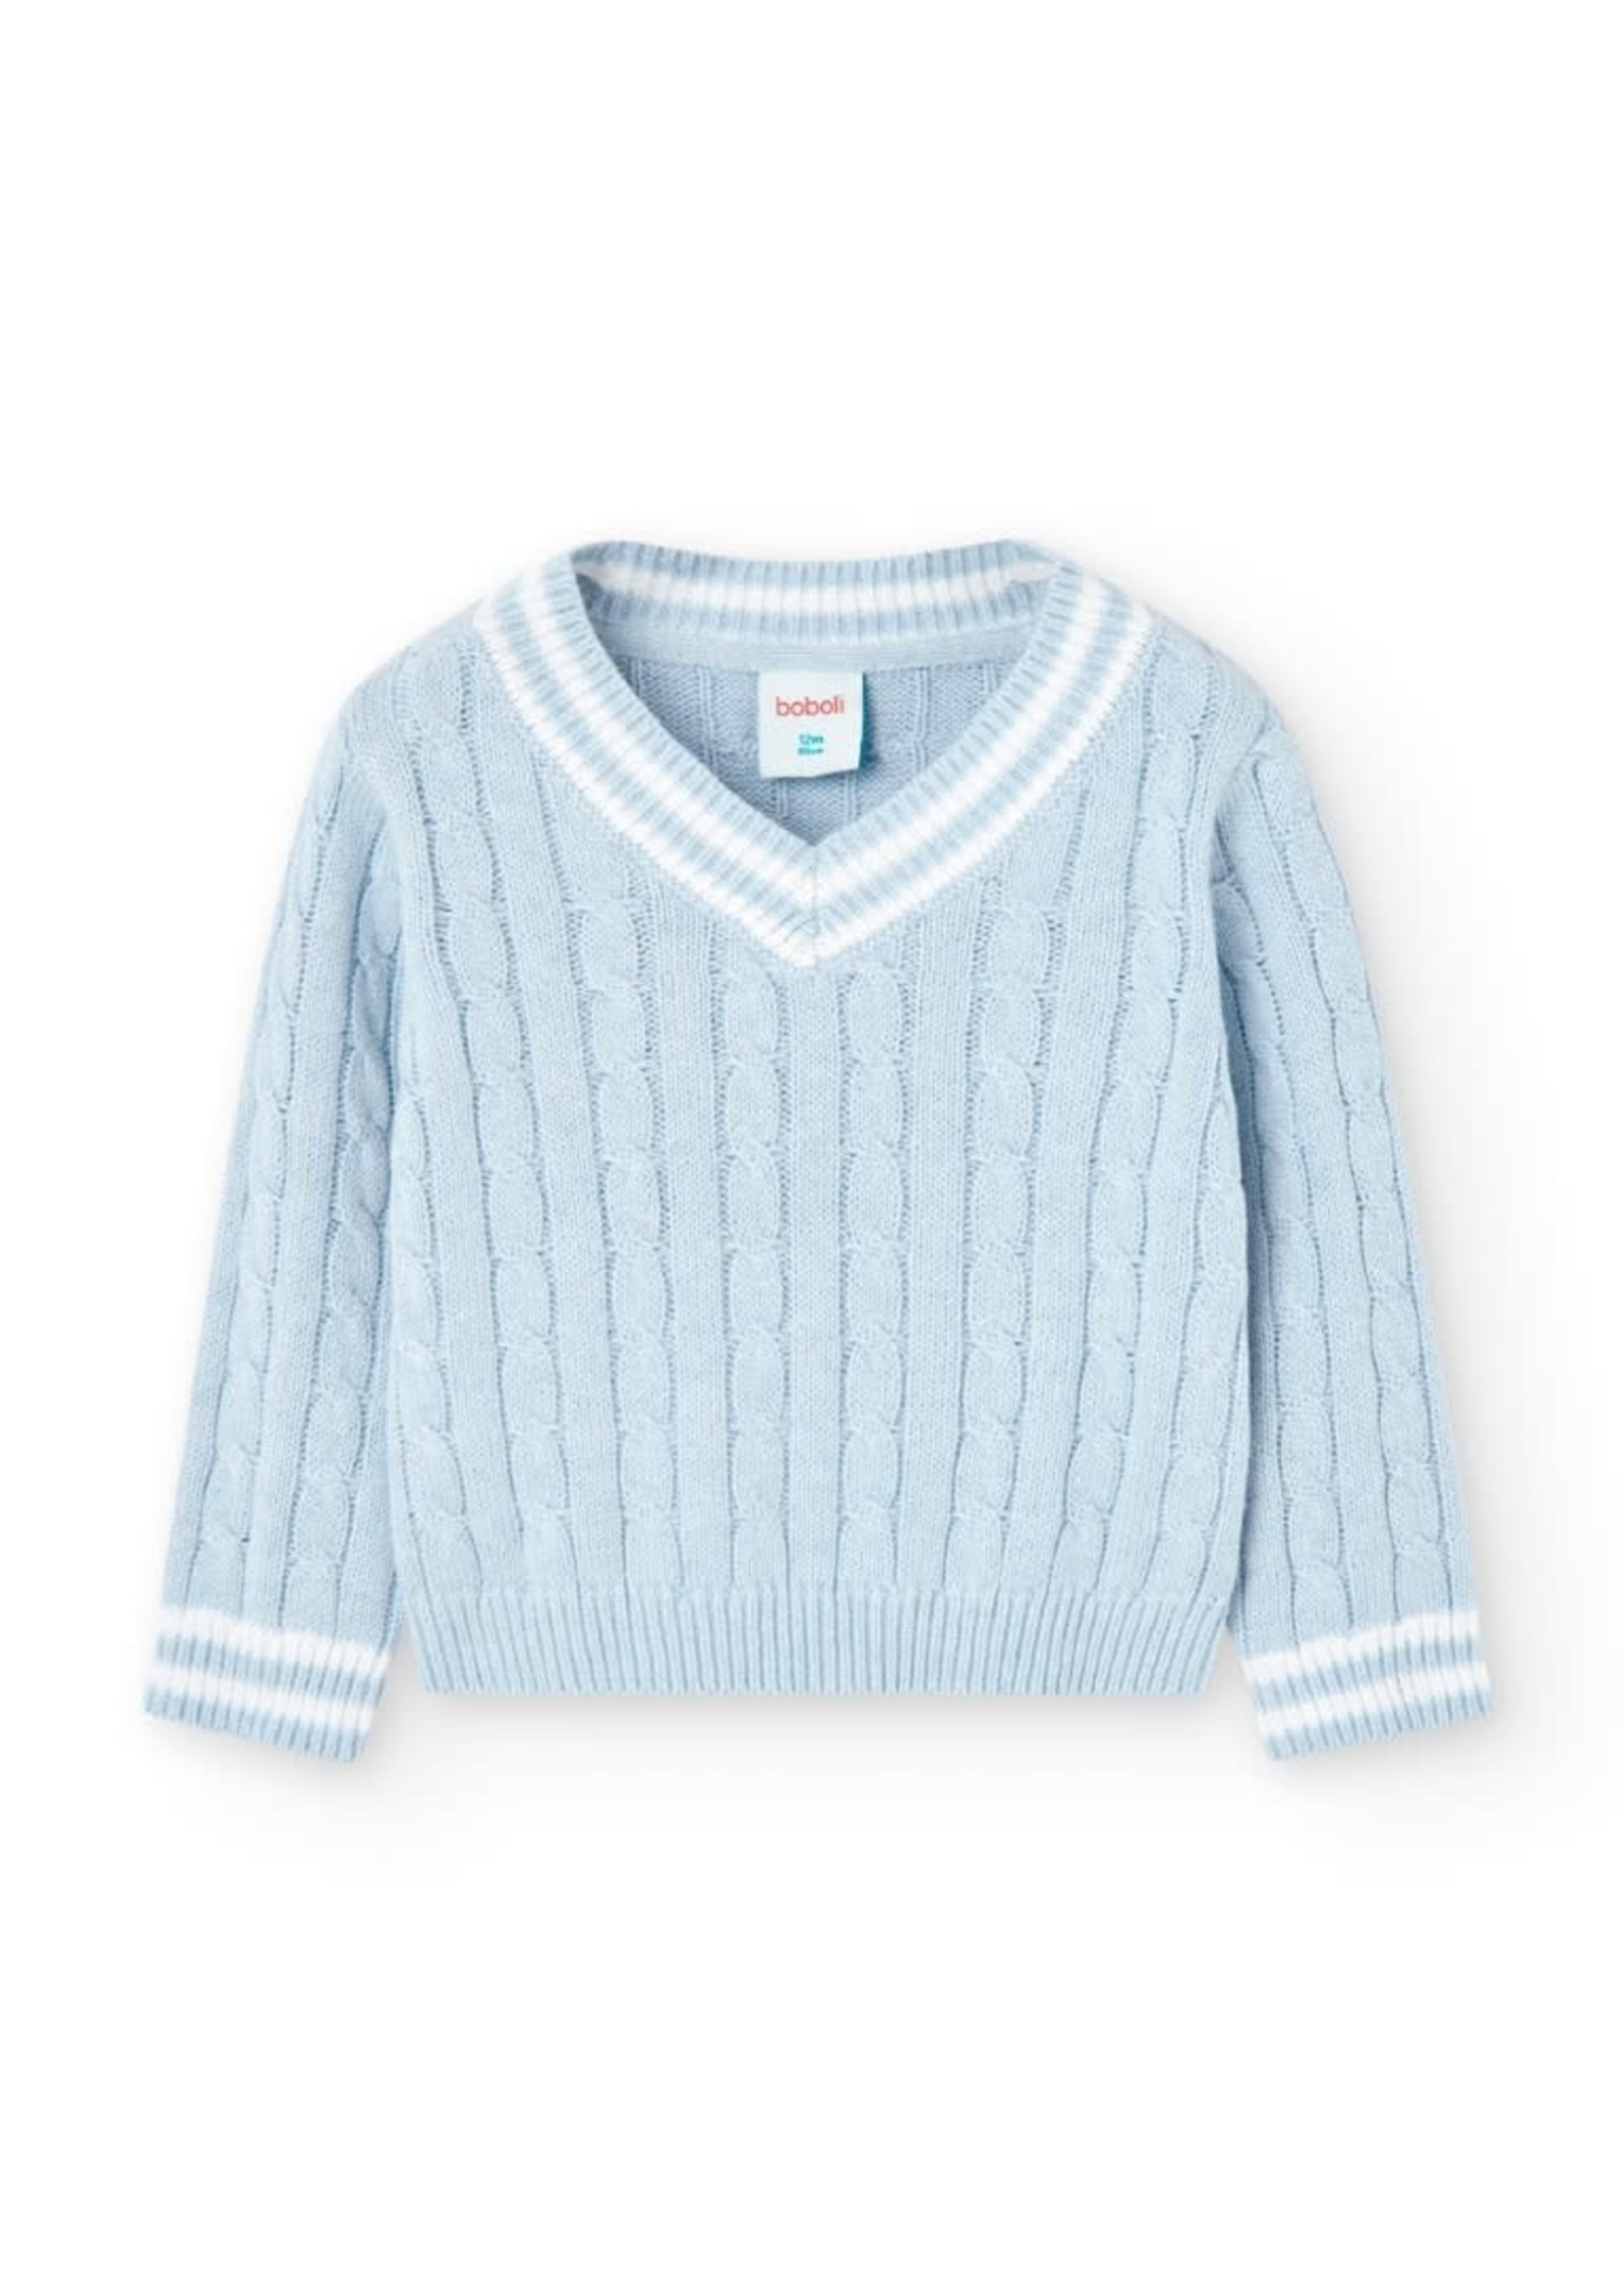 Boboli Knitwear pullover v-neck for baby BLUE 716004